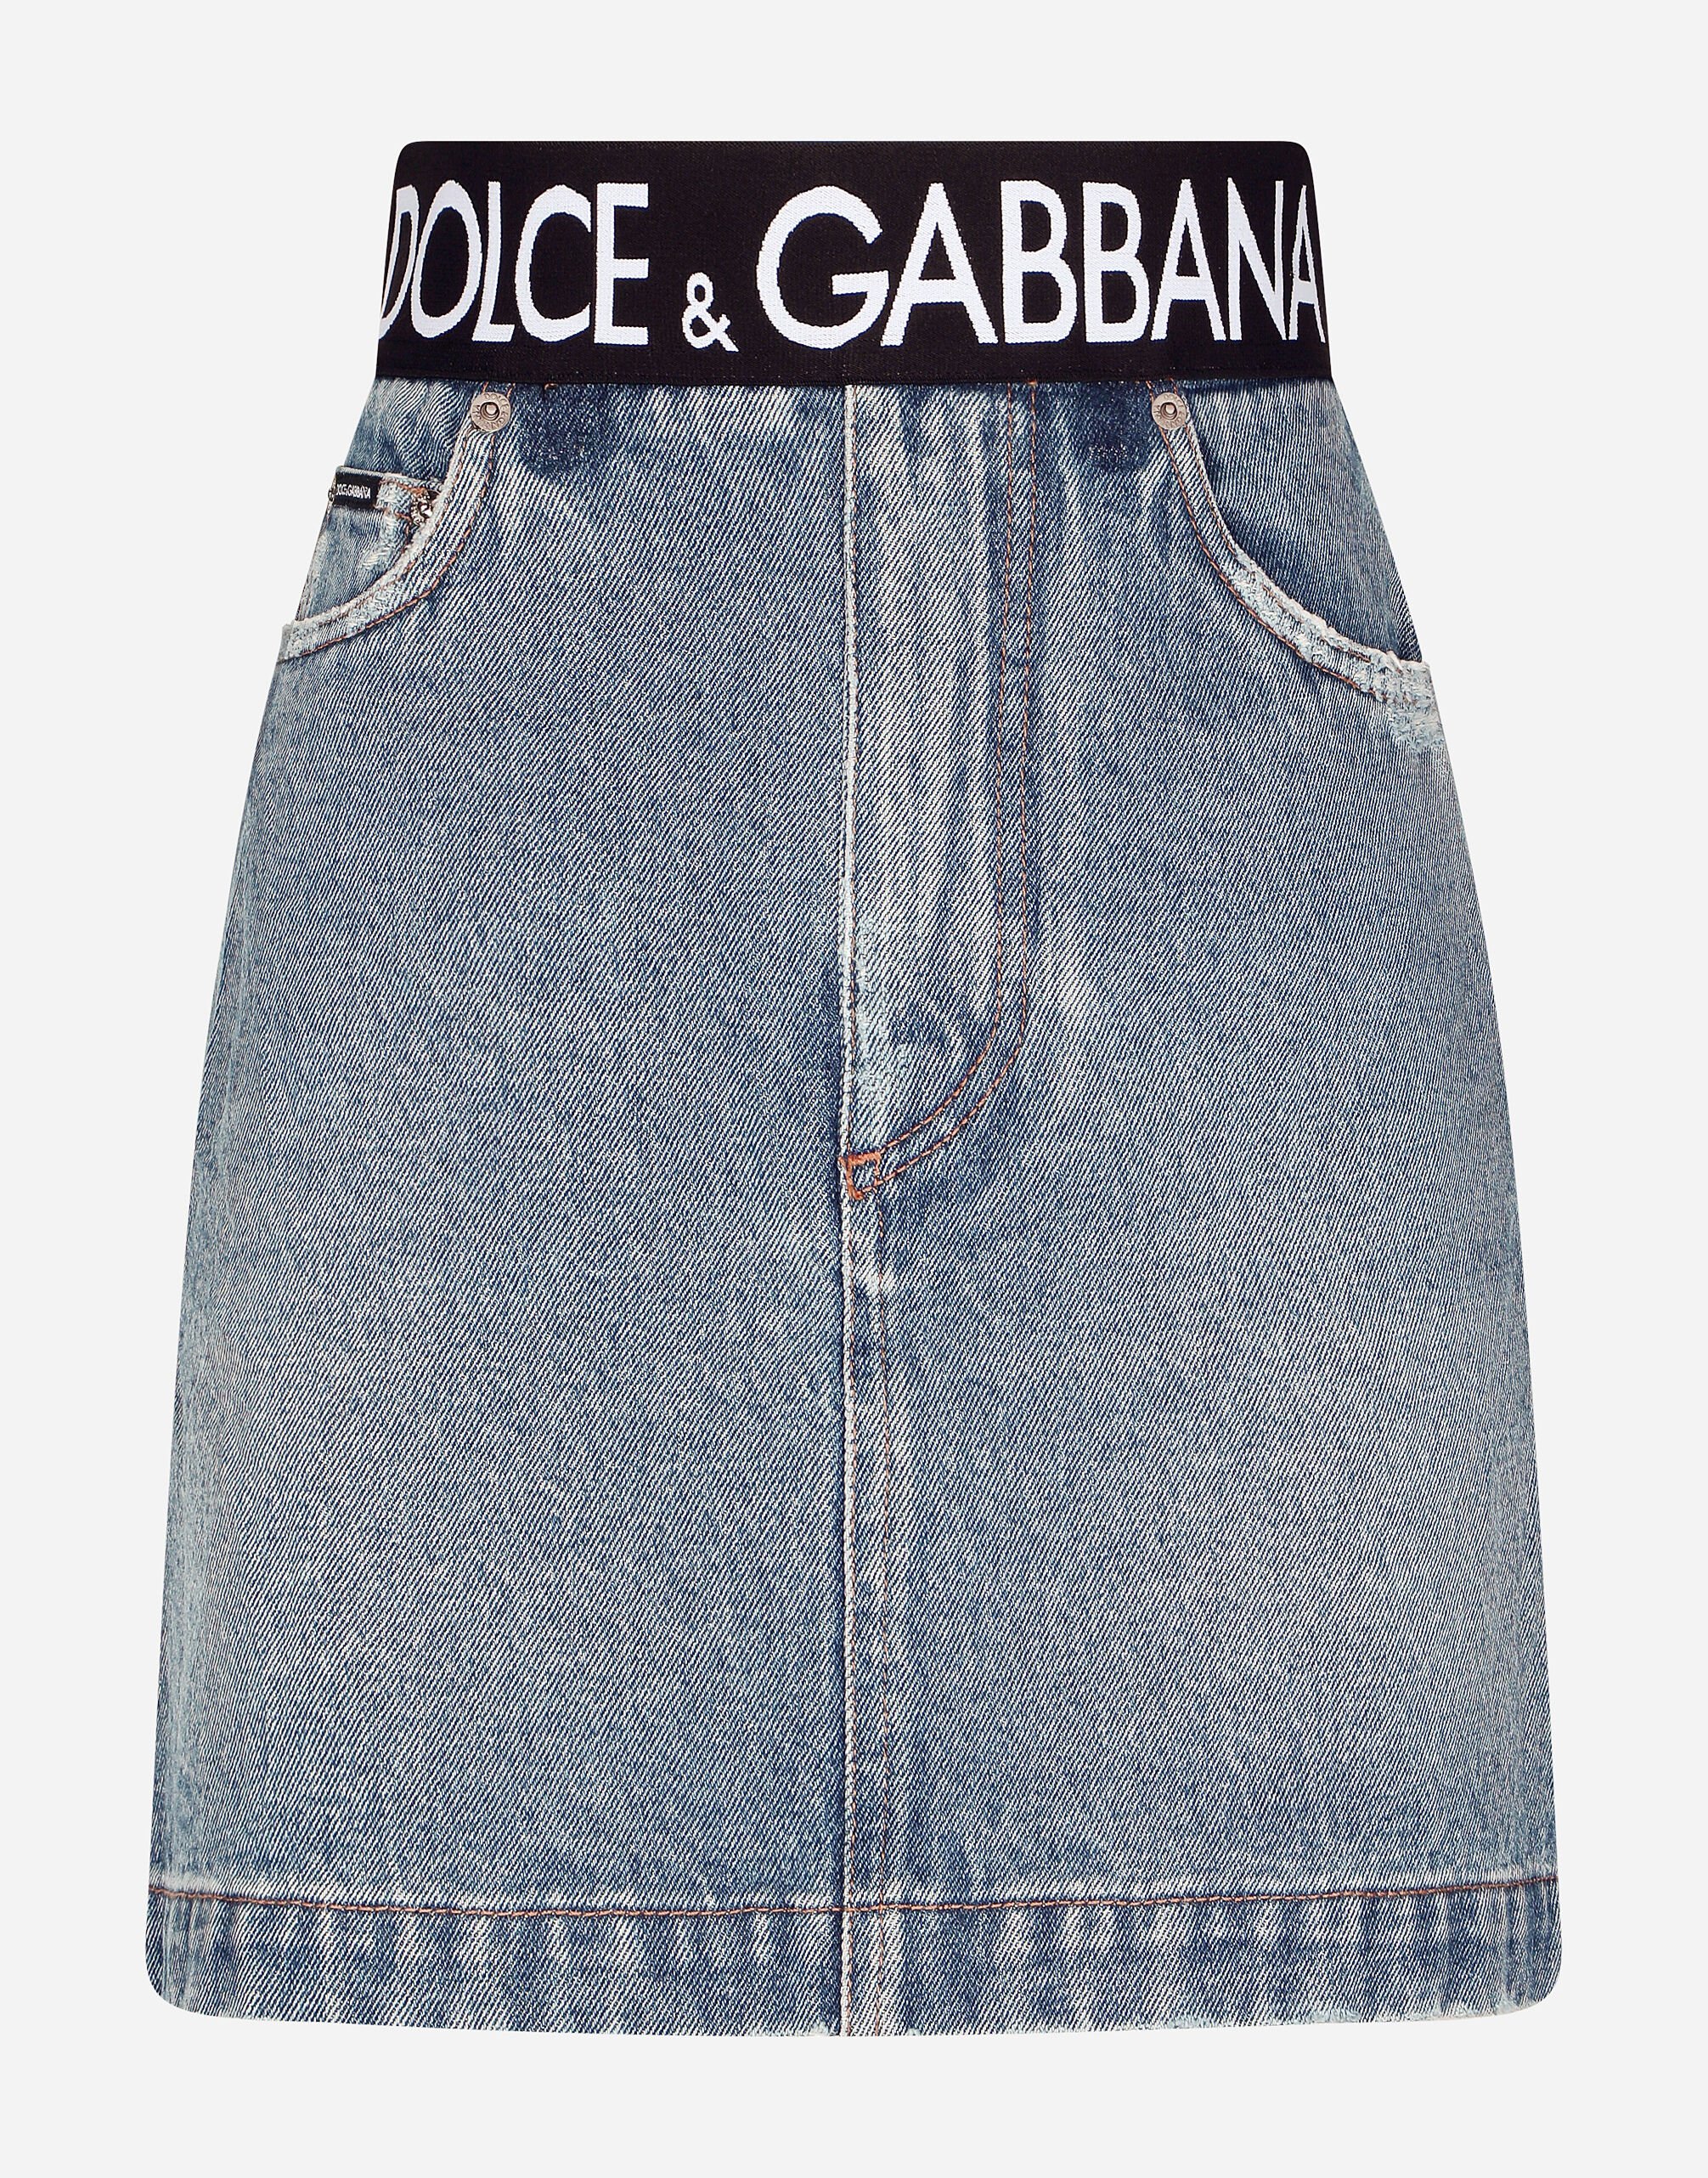 Dolce & Gabbana Short denim skirt with branded waistband Multicolor FTCDDDG8HU3